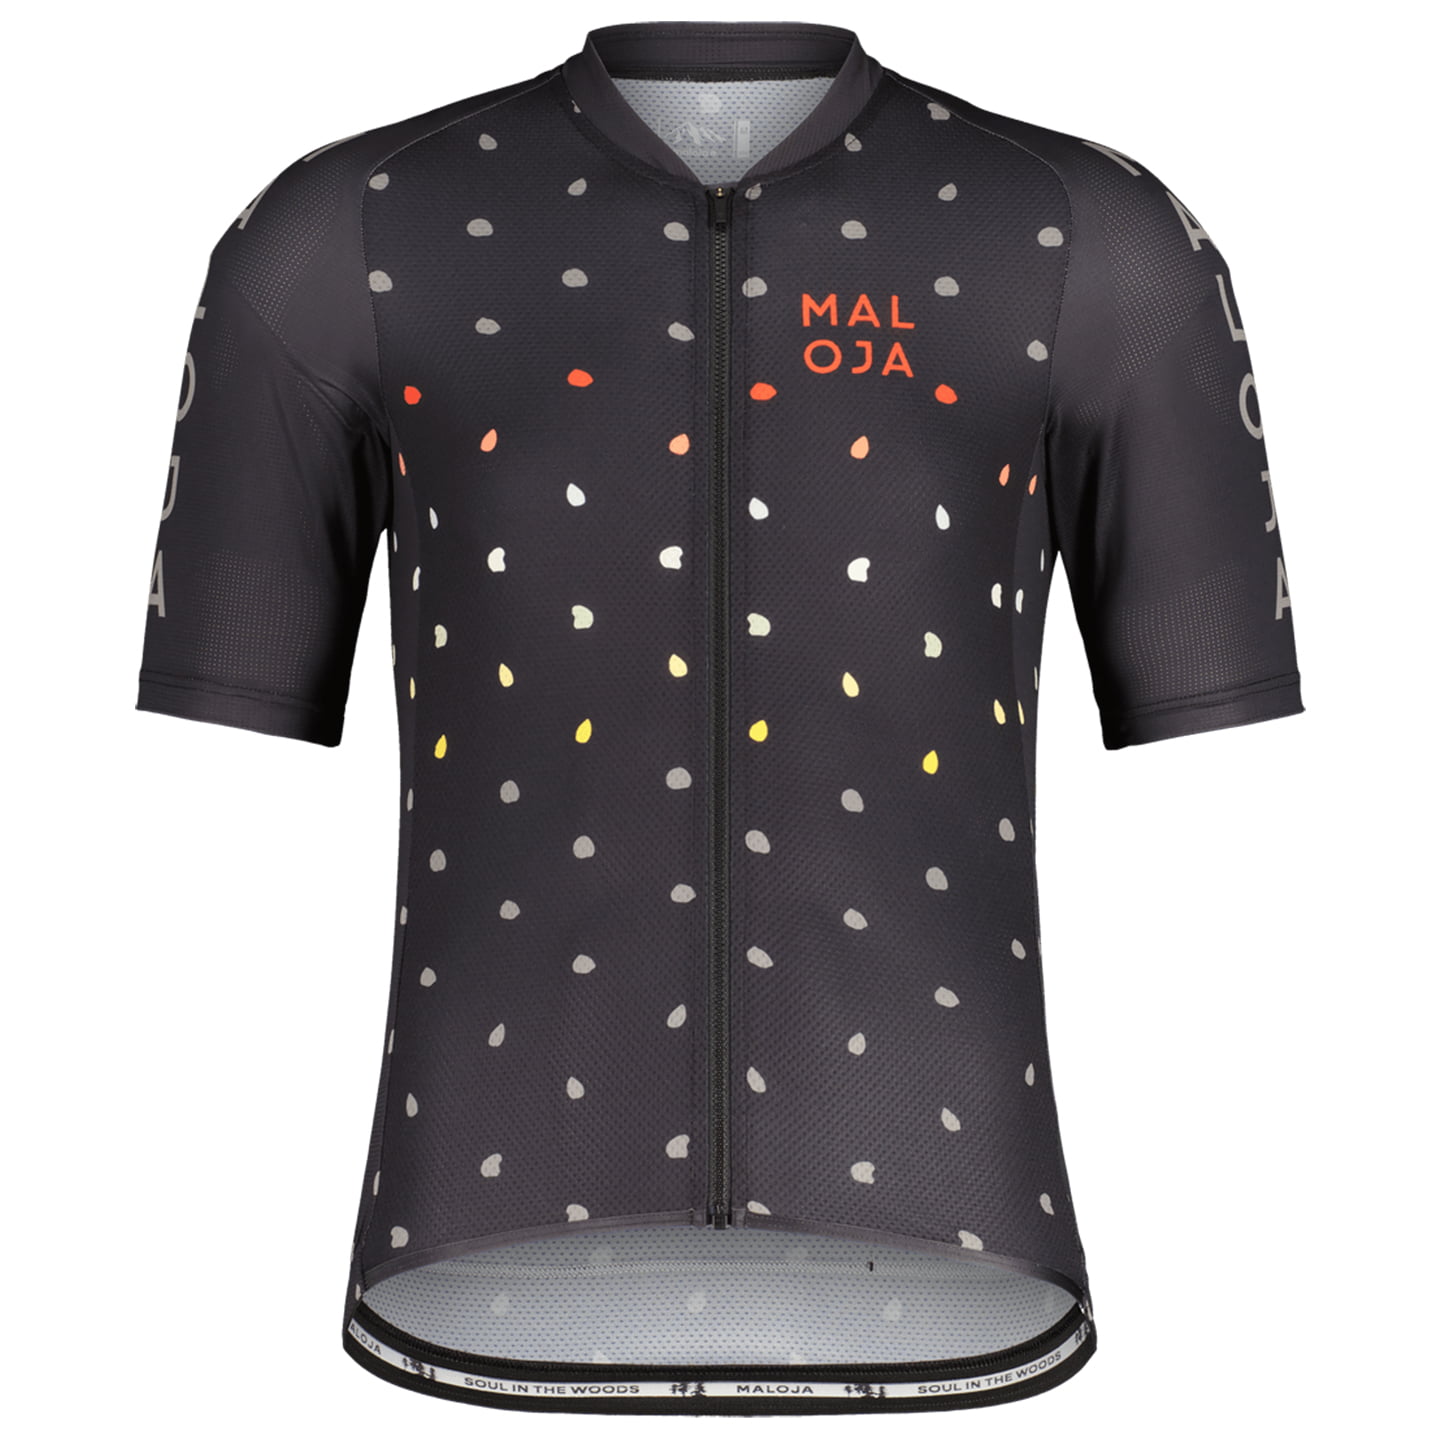 MALOJA TaibonM. Short Sleeve Jersey Short Sleeve Jersey, for men, size XL, Cycling jersey, Cycle clothing